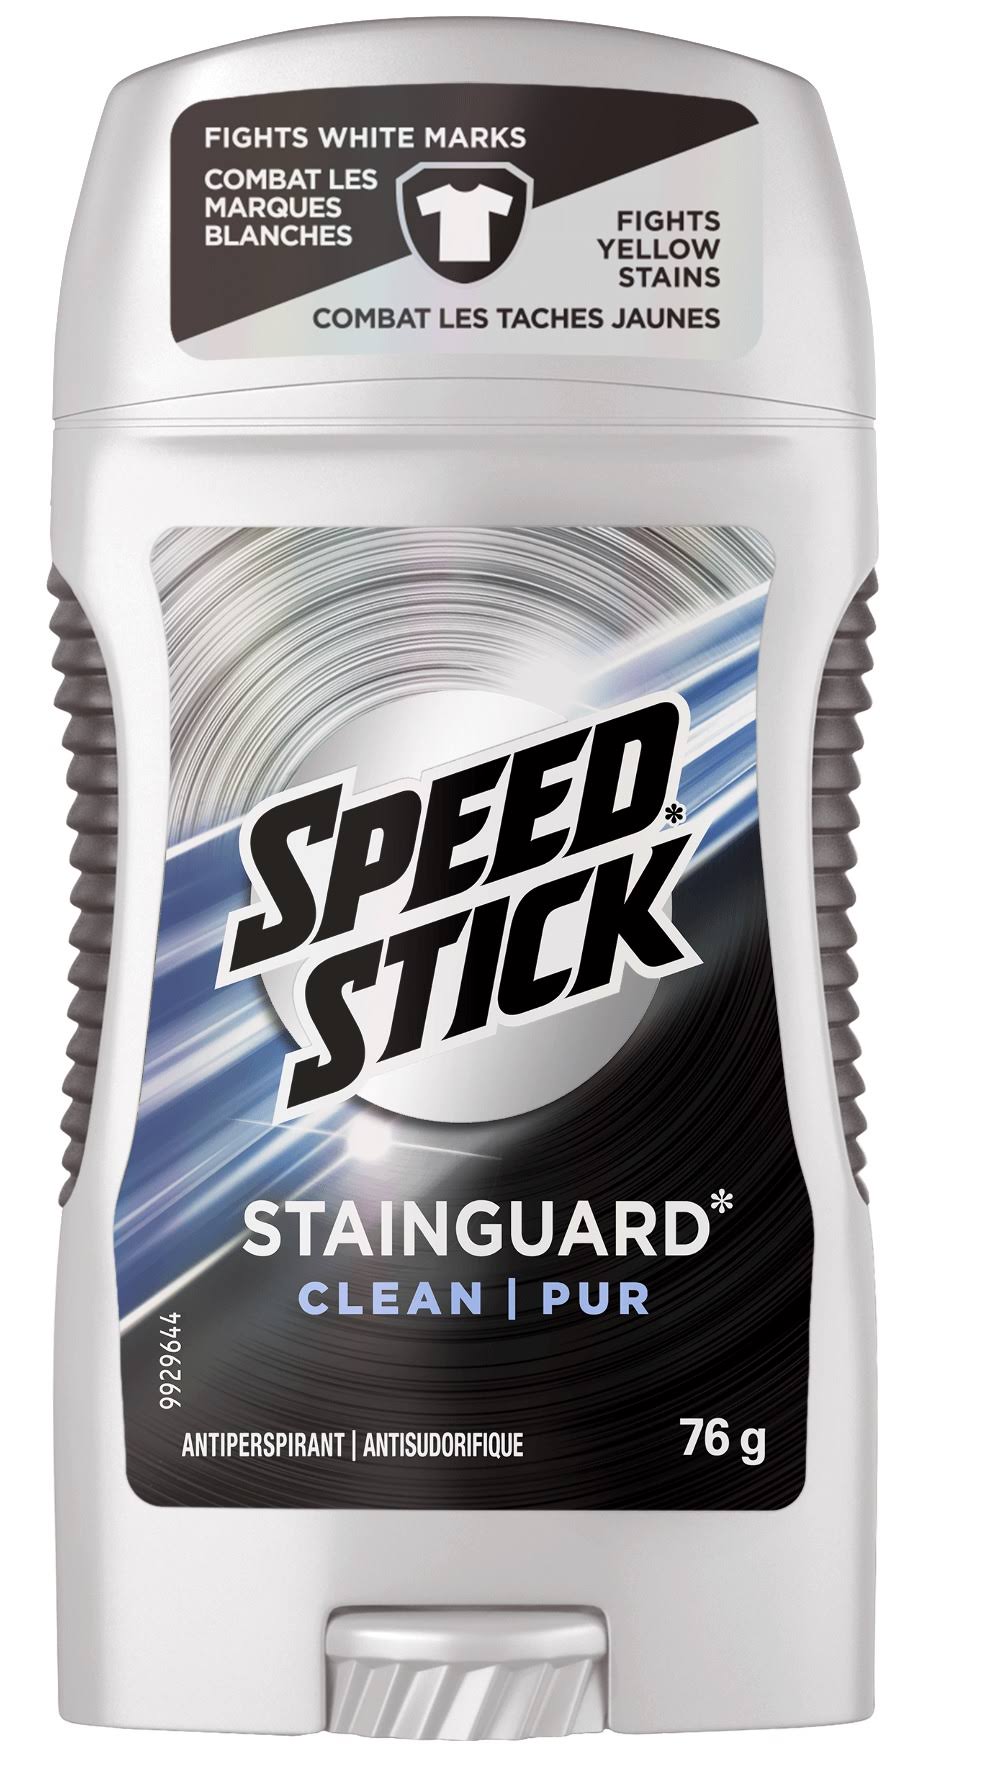 Speed Stick Stainguard Antiperspirant - Clean, 76g